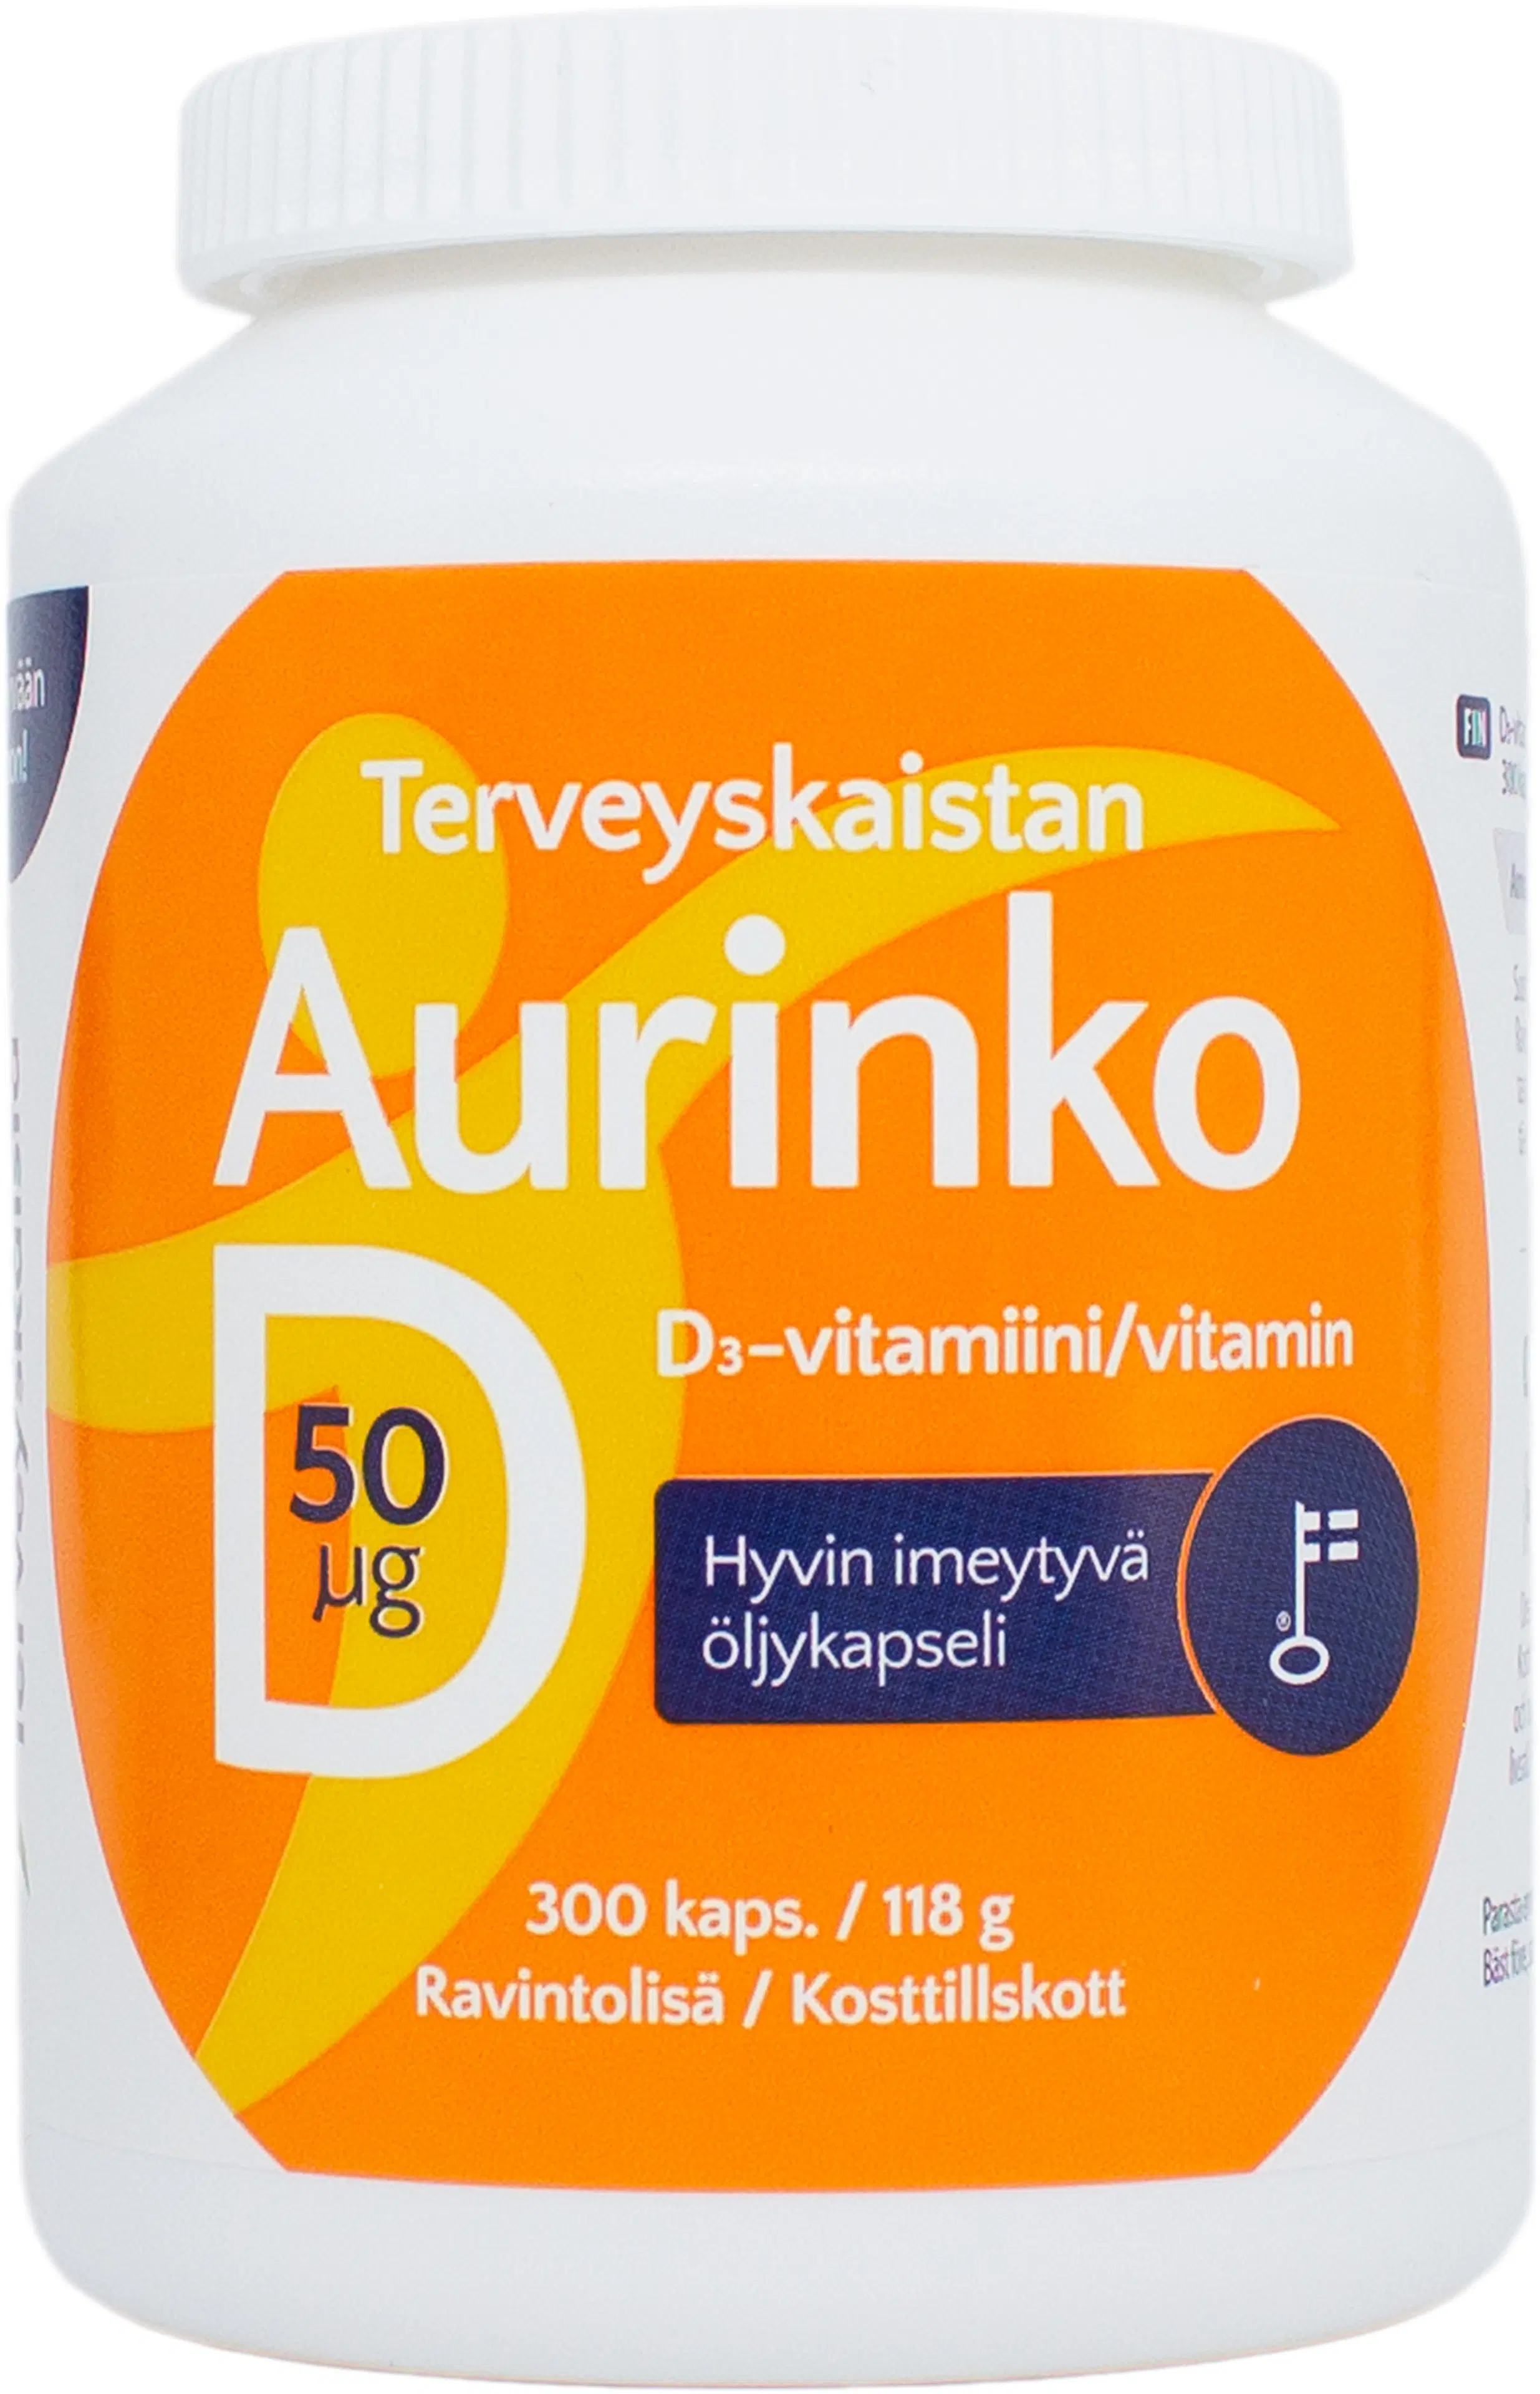 Terveyskaistan Aurinko D 50 µg D3 vitamiini 300 kaps.